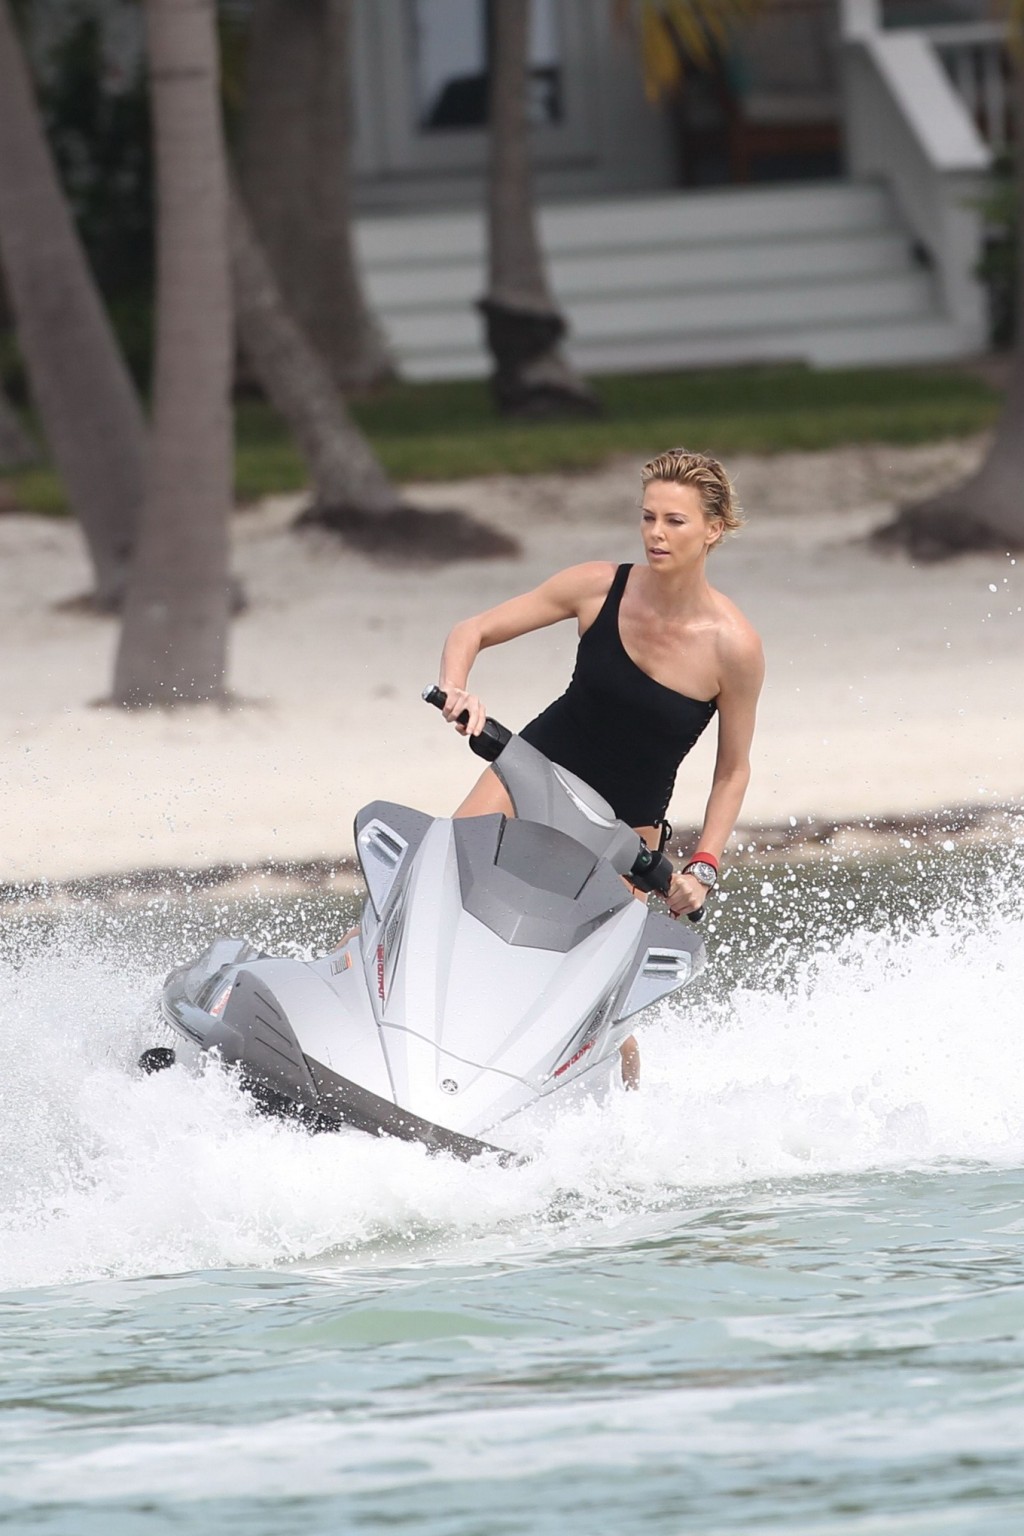 Charlize Theron jet skiing in black monokini during the photoshoot in Miami Beac #75201252